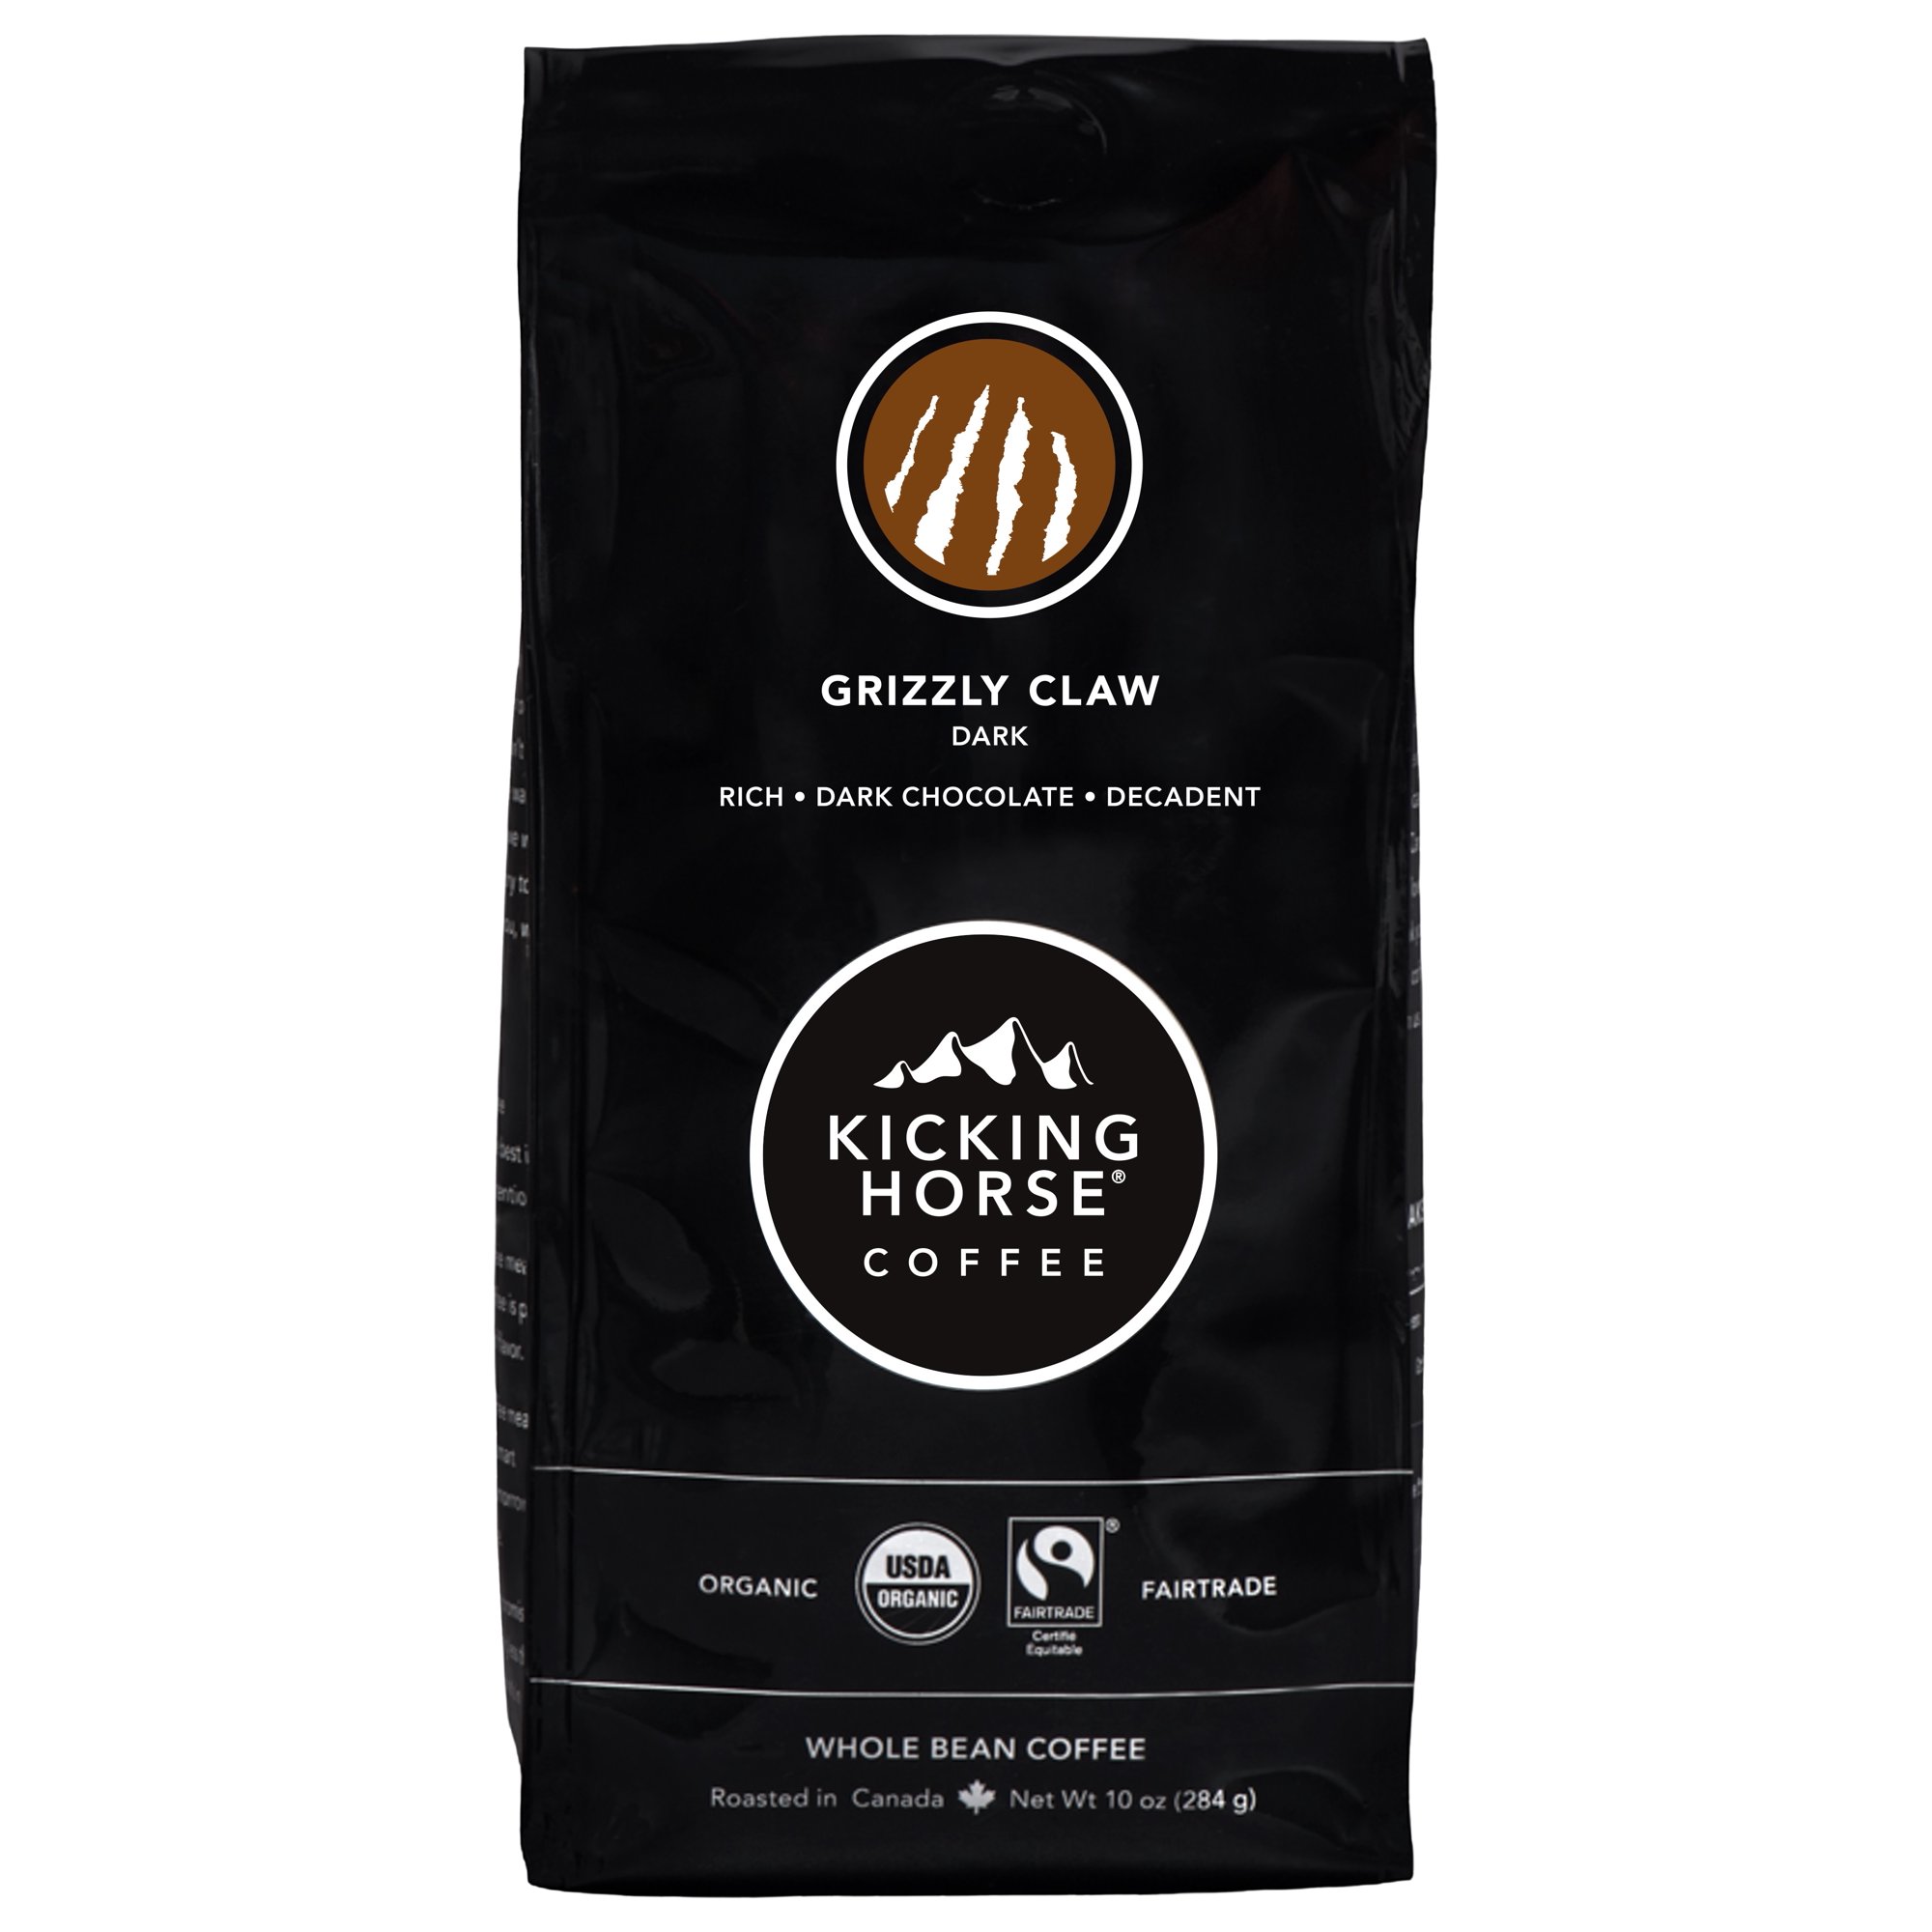 Kicking Horse Coffee, Grizzly Claw, Dark Roast, Whole Bean Coffee, 10 oz